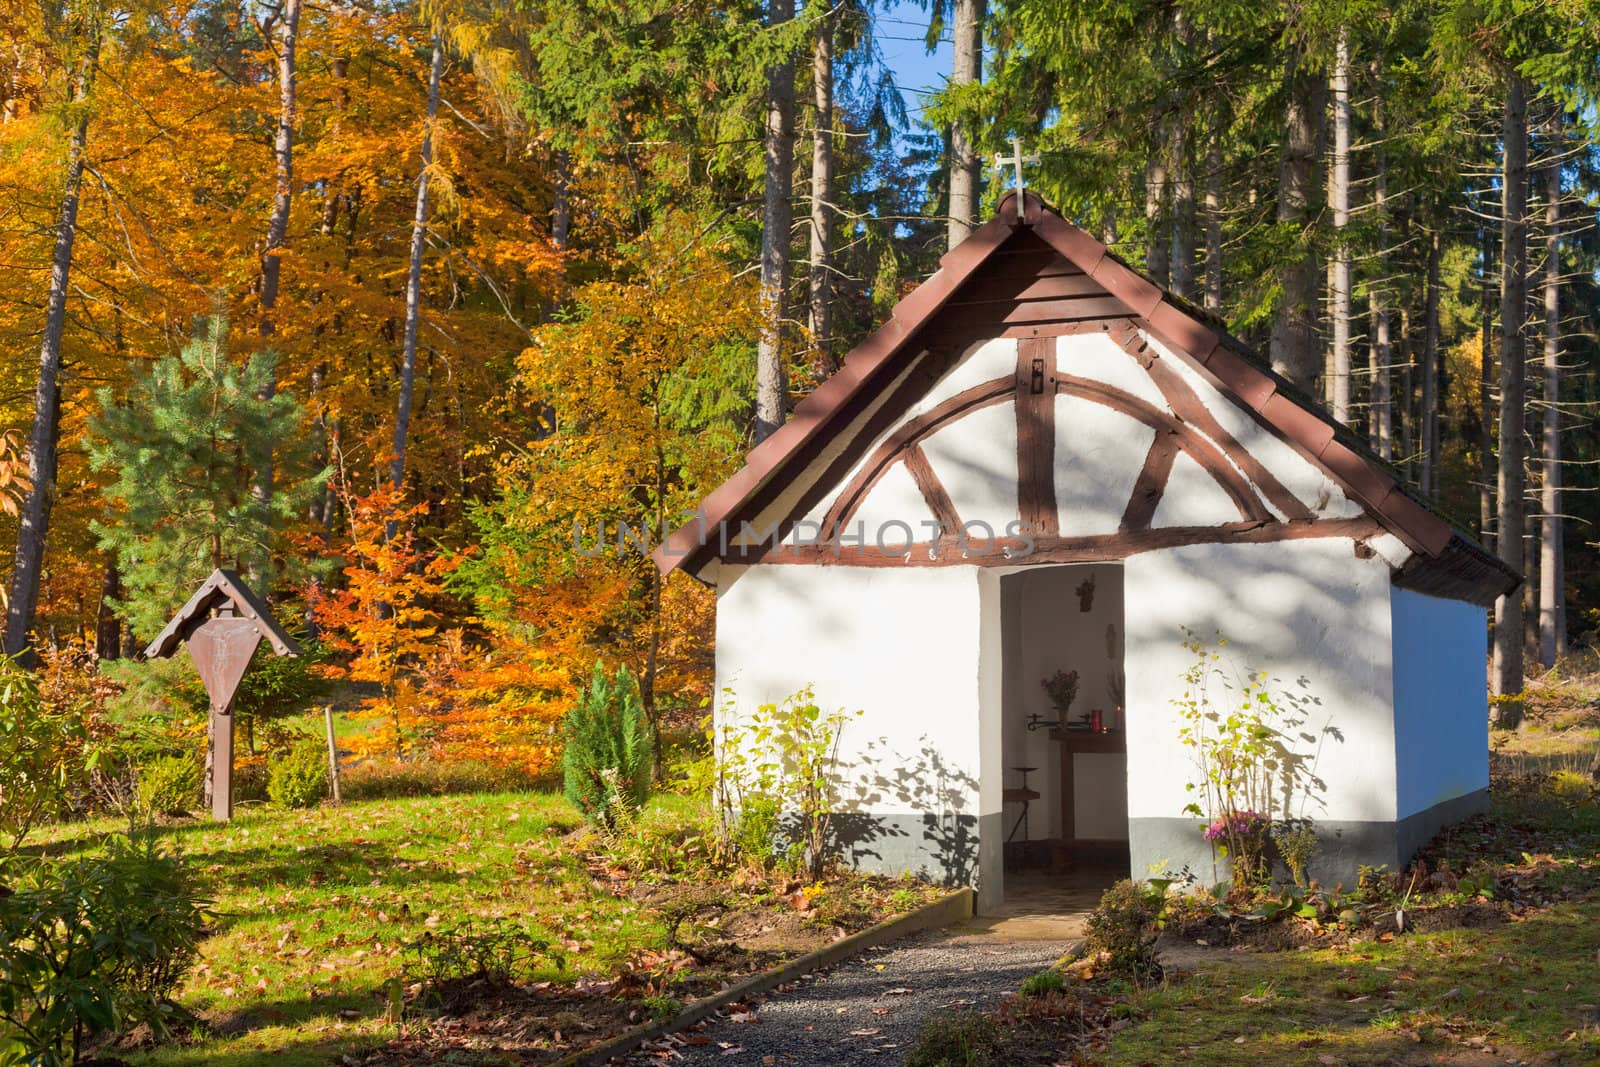 Historic chapel (from 1823) in beautiful fall forest of Eifel region, rural Germany.